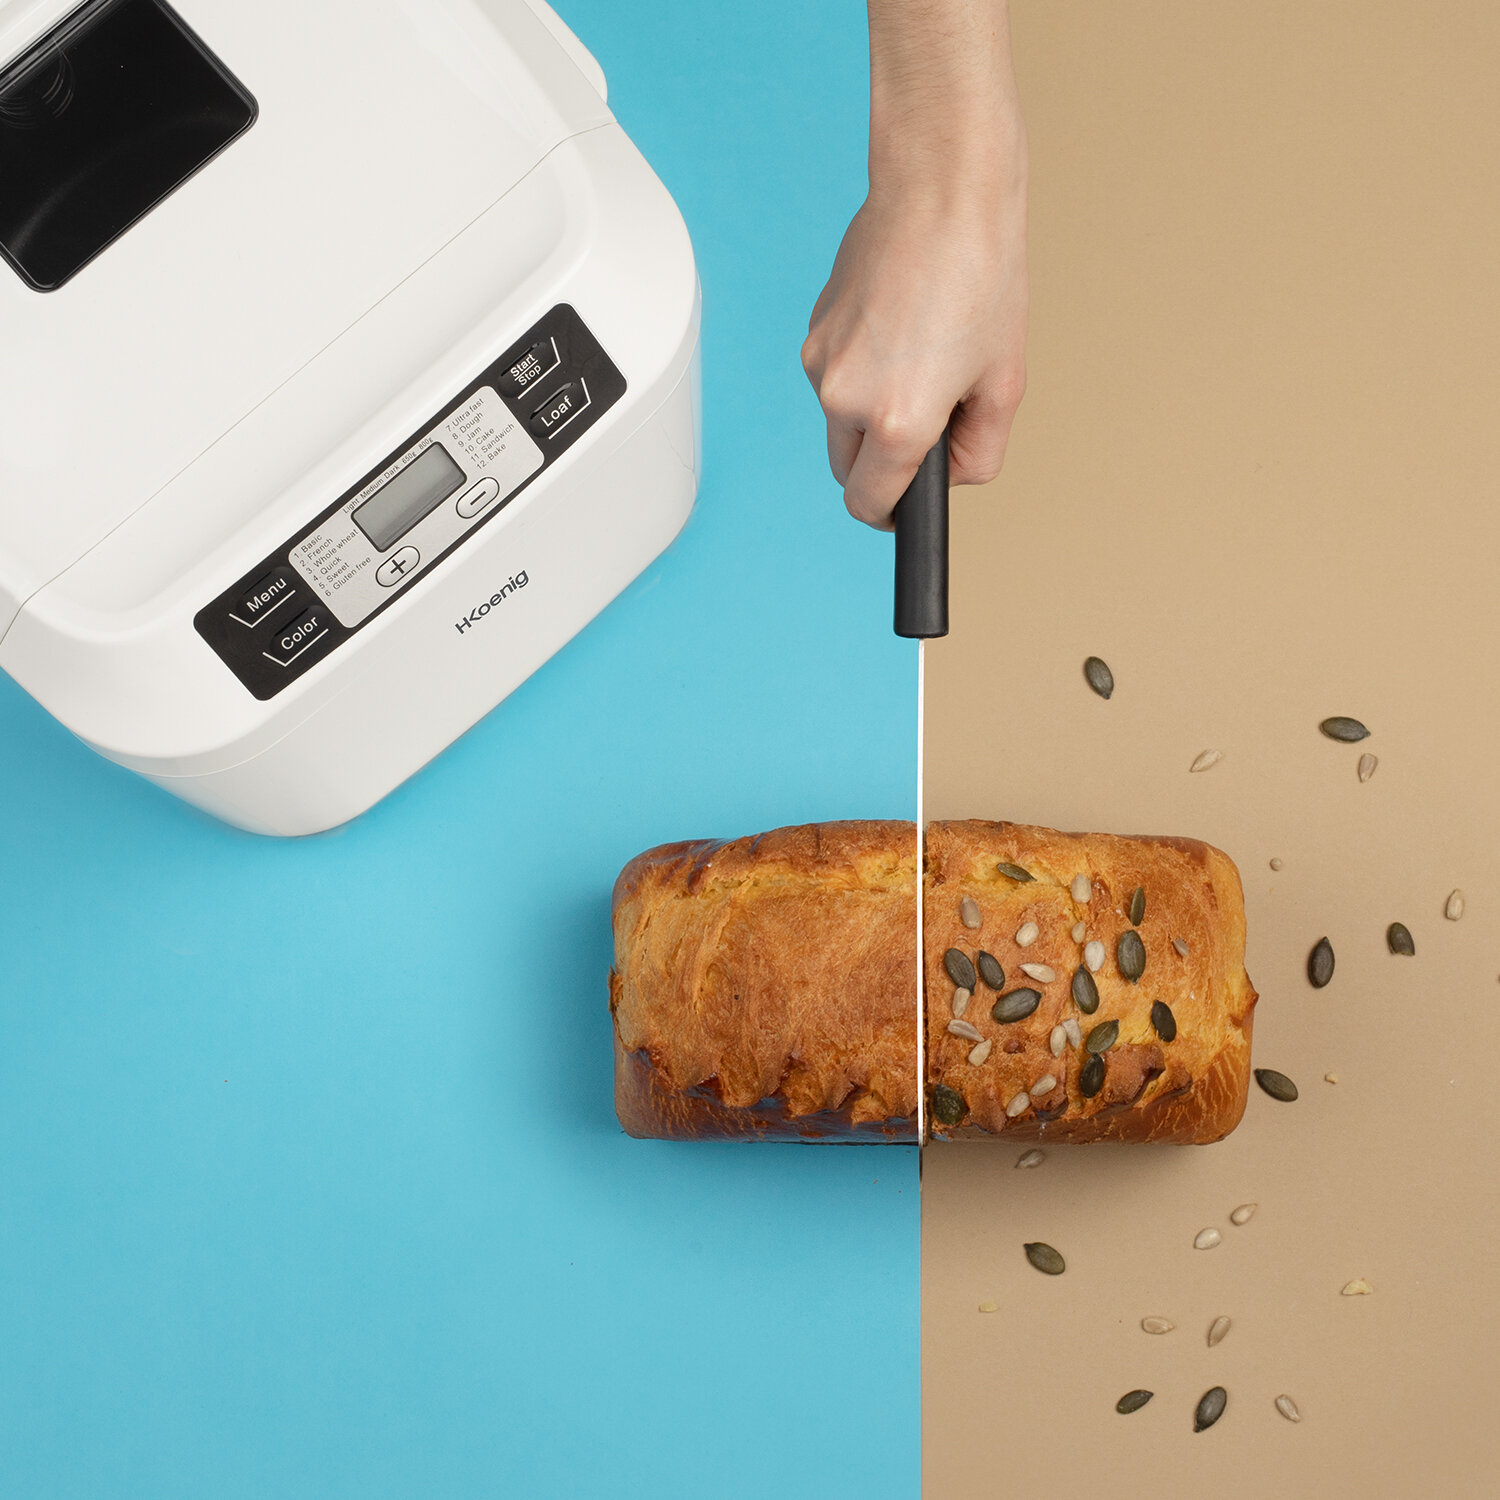 H.Koenig Brotbackautomat BAKE320 Küchenartikel & Haushaltsartikel Küchengeräte Brotbackautomaten 